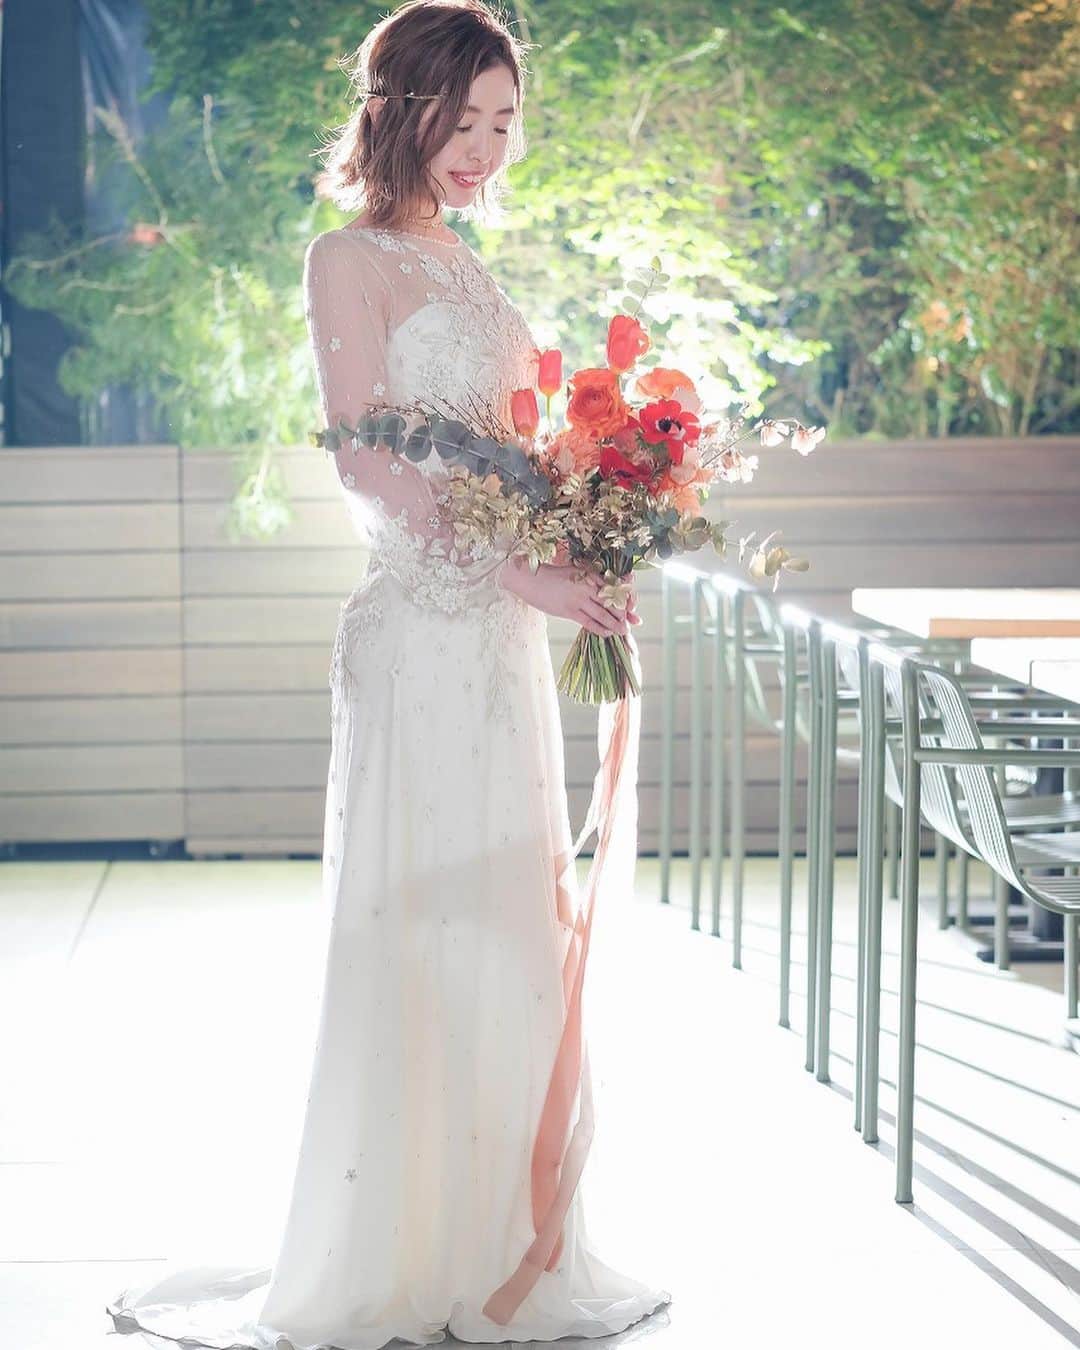 ARCH DAYS Weddingsさんのインスタグラム写真 - (ARCH DAYS WeddingsInstagram)「#イリュージョンネック のドレスって知ってる？？﻿ ﻿ ﻿ 今回は、デコルテや背中を素肌が見えるほど透け感たっぷりのレース素材で覆い、刺繍や装飾を施したデザイン“イリュージョンネック”の #ウェディングドレス をご紹介します💐✨﻿ ﻿ ﻿ ﻿ ▽ARCH DAYSトップページはこちらから☑﻿﻿﻿﻿﻿﻿﻿﻿﻿﻿﻿﻿﻿﻿﻿﻿﻿﻿﻿﻿﻿﻿﻿﻿﻿﻿﻿﻿﻿﻿﻿﻿﻿﻿﻿﻿﻿﻿﻿﻿﻿﻿﻿﻿ @archdays_weddings﻿﻿﻿﻿﻿﻿﻿﻿﻿﻿﻿﻿﻿﻿﻿﻿﻿﻿﻿﻿﻿﻿﻿﻿﻿﻿﻿﻿﻿﻿﻿﻿﻿﻿﻿﻿﻿﻿﻿﻿﻿﻿﻿﻿﻿ プロフィールのリンクから👰🏻﻿﻿﻿﻿﻿﻿﻿﻿﻿﻿﻿﻿﻿﻿﻿﻿﻿﻿﻿﻿﻿﻿﻿﻿﻿﻿﻿﻿﻿﻿﻿﻿﻿﻿﻿﻿﻿﻿﻿﻿﻿﻿﻿﻿﻿ ﻿﻿﻿﻿﻿﻿﻿﻿﻿﻿﻿﻿﻿﻿﻿﻿﻿﻿﻿﻿﻿﻿﻿﻿﻿﻿﻿﻿﻿﻿﻿﻿﻿﻿﻿ ﻿﻿﻿﻿﻿﻿﻿﻿﻿﻿﻿﻿﻿﻿﻿﻿﻿﻿﻿﻿﻿﻿﻿﻿﻿﻿﻿﻿ ﻿﻿﻿﻿﻿﻿﻿﻿#archdays花嫁 をつけて投稿して頂いた方にサイト掲載のお声がけをさせて頂く場合があります🕊🌿﻿﻿﻿﻿﻿﻿﻿﻿﻿﻿﻿﻿﻿﻿﻿﻿﻿﻿﻿﻿﻿﻿﻿﻿﻿﻿﻿﻿﻿﻿﻿﻿﻿﻿﻿﻿﻿﻿﻿﻿﻿﻿﻿﻿﻿ ﻿﻿﻿﻿ ﻿﻿﻿﻿ ▽バースデー・ベビーシャワーなどの情報を見るなら💁🎉﻿﻿﻿﻿﻿﻿﻿﻿﻿﻿﻿﻿﻿﻿﻿﻿﻿﻿﻿﻿﻿﻿﻿﻿﻿﻿﻿﻿﻿﻿﻿﻿﻿﻿﻿﻿﻿﻿﻿﻿﻿﻿﻿﻿﻿ @archdays﻿﻿﻿﻿﻿﻿﻿﻿﻿﻿﻿﻿﻿﻿﻿﻿﻿﻿﻿﻿﻿﻿﻿﻿﻿﻿﻿﻿﻿﻿﻿﻿﻿﻿﻿﻿﻿﻿﻿﻿﻿﻿﻿﻿﻿ ﻿﻿﻿﻿ ﻿ ﻿﻿﻿﻿ ----------------------﻿﻿﻿﻿﻿﻿ #archdays #ウエディングドレス試着 #ウエディングドレス選び #インポートドレス #ウェディングドレス選び #ウェディングドレス試着 #ウェディングドレス試着レポ #ウェディングドレス迷子 #ウェディングドレス探し #ドレス #ドレス迷子 #ドレス探し #ドレス選び #ドレス試着 #ドレスレポ #ドレス試着レポ #結婚式 #ウェディング #ブライダル #プレ花嫁 #卒花嫁 #卒花 #2019春婚 #2019夏婚 #2019秋婚 #2019冬婚﻿﻿﻿﻿﻿﻿ ﻿﻿﻿﻿﻿﻿ ----------------------﻿ https://archdays.com/column/2019/06/13/44563﻿ ----------------------」6月23日 20時02分 - archdays_weddings